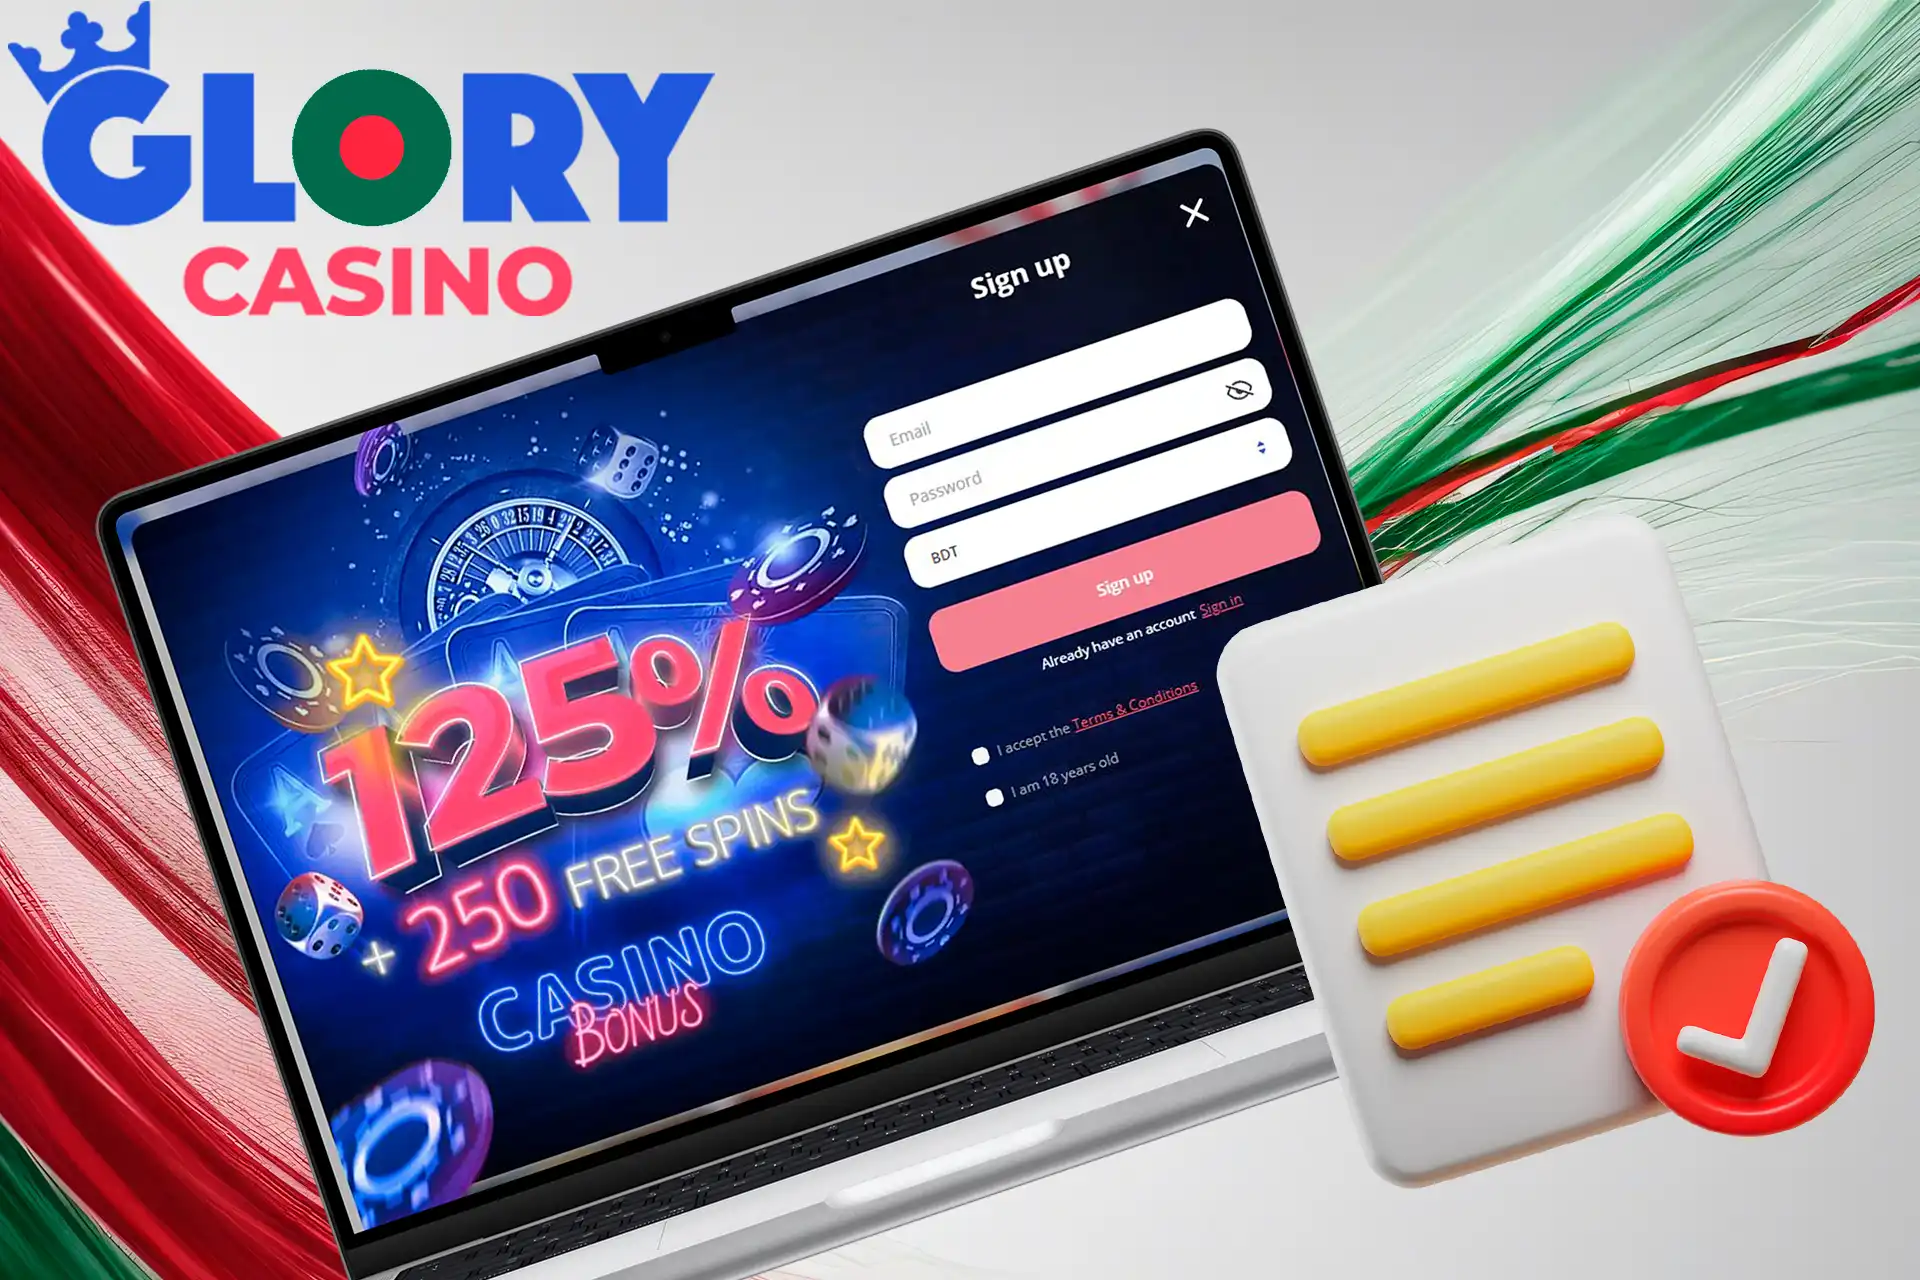 Easy registration process at Glory Casino Bangladesh